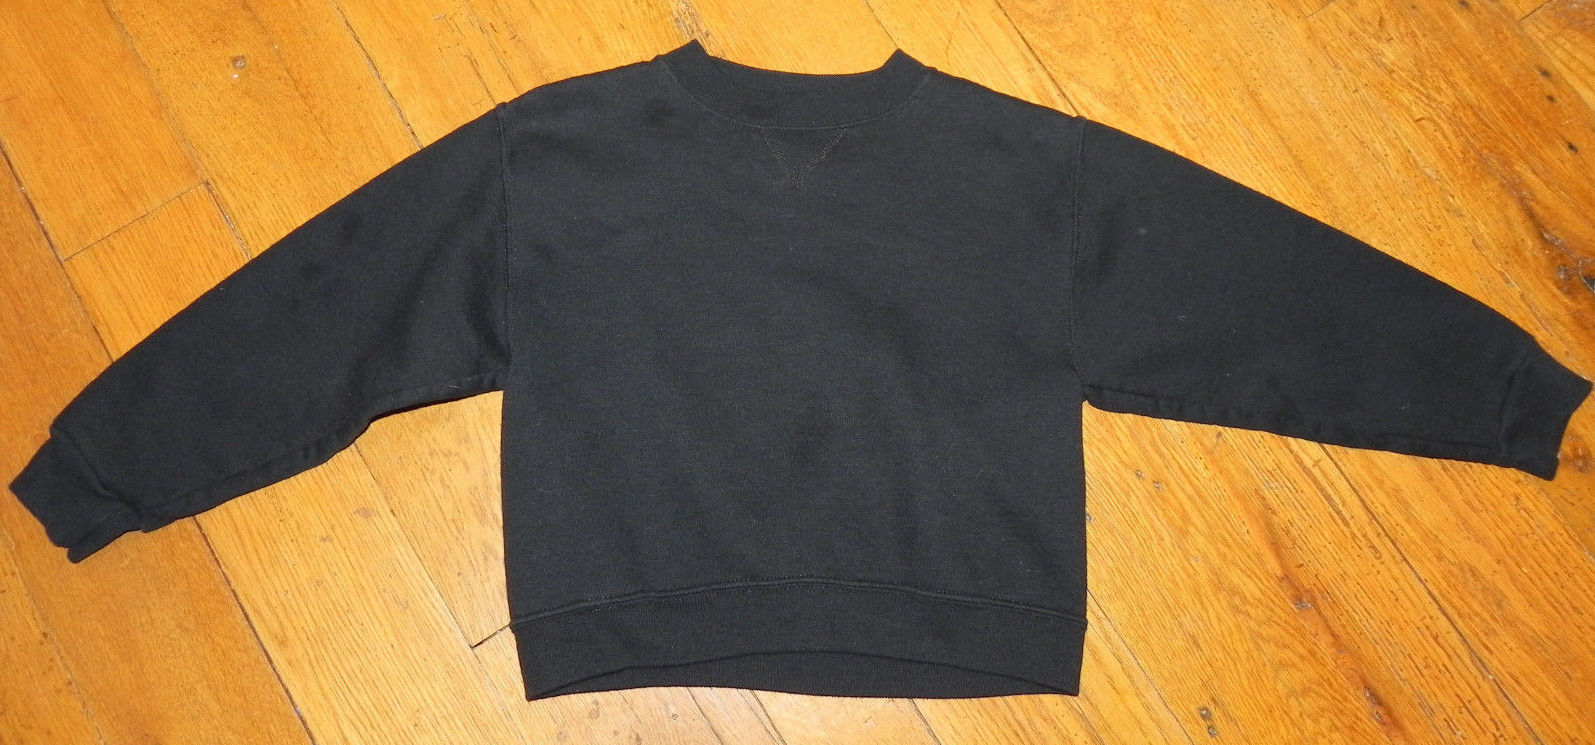 Boy's Black Jerzees Sweatshirt Size Small 6 - Great Condition! - $5.93